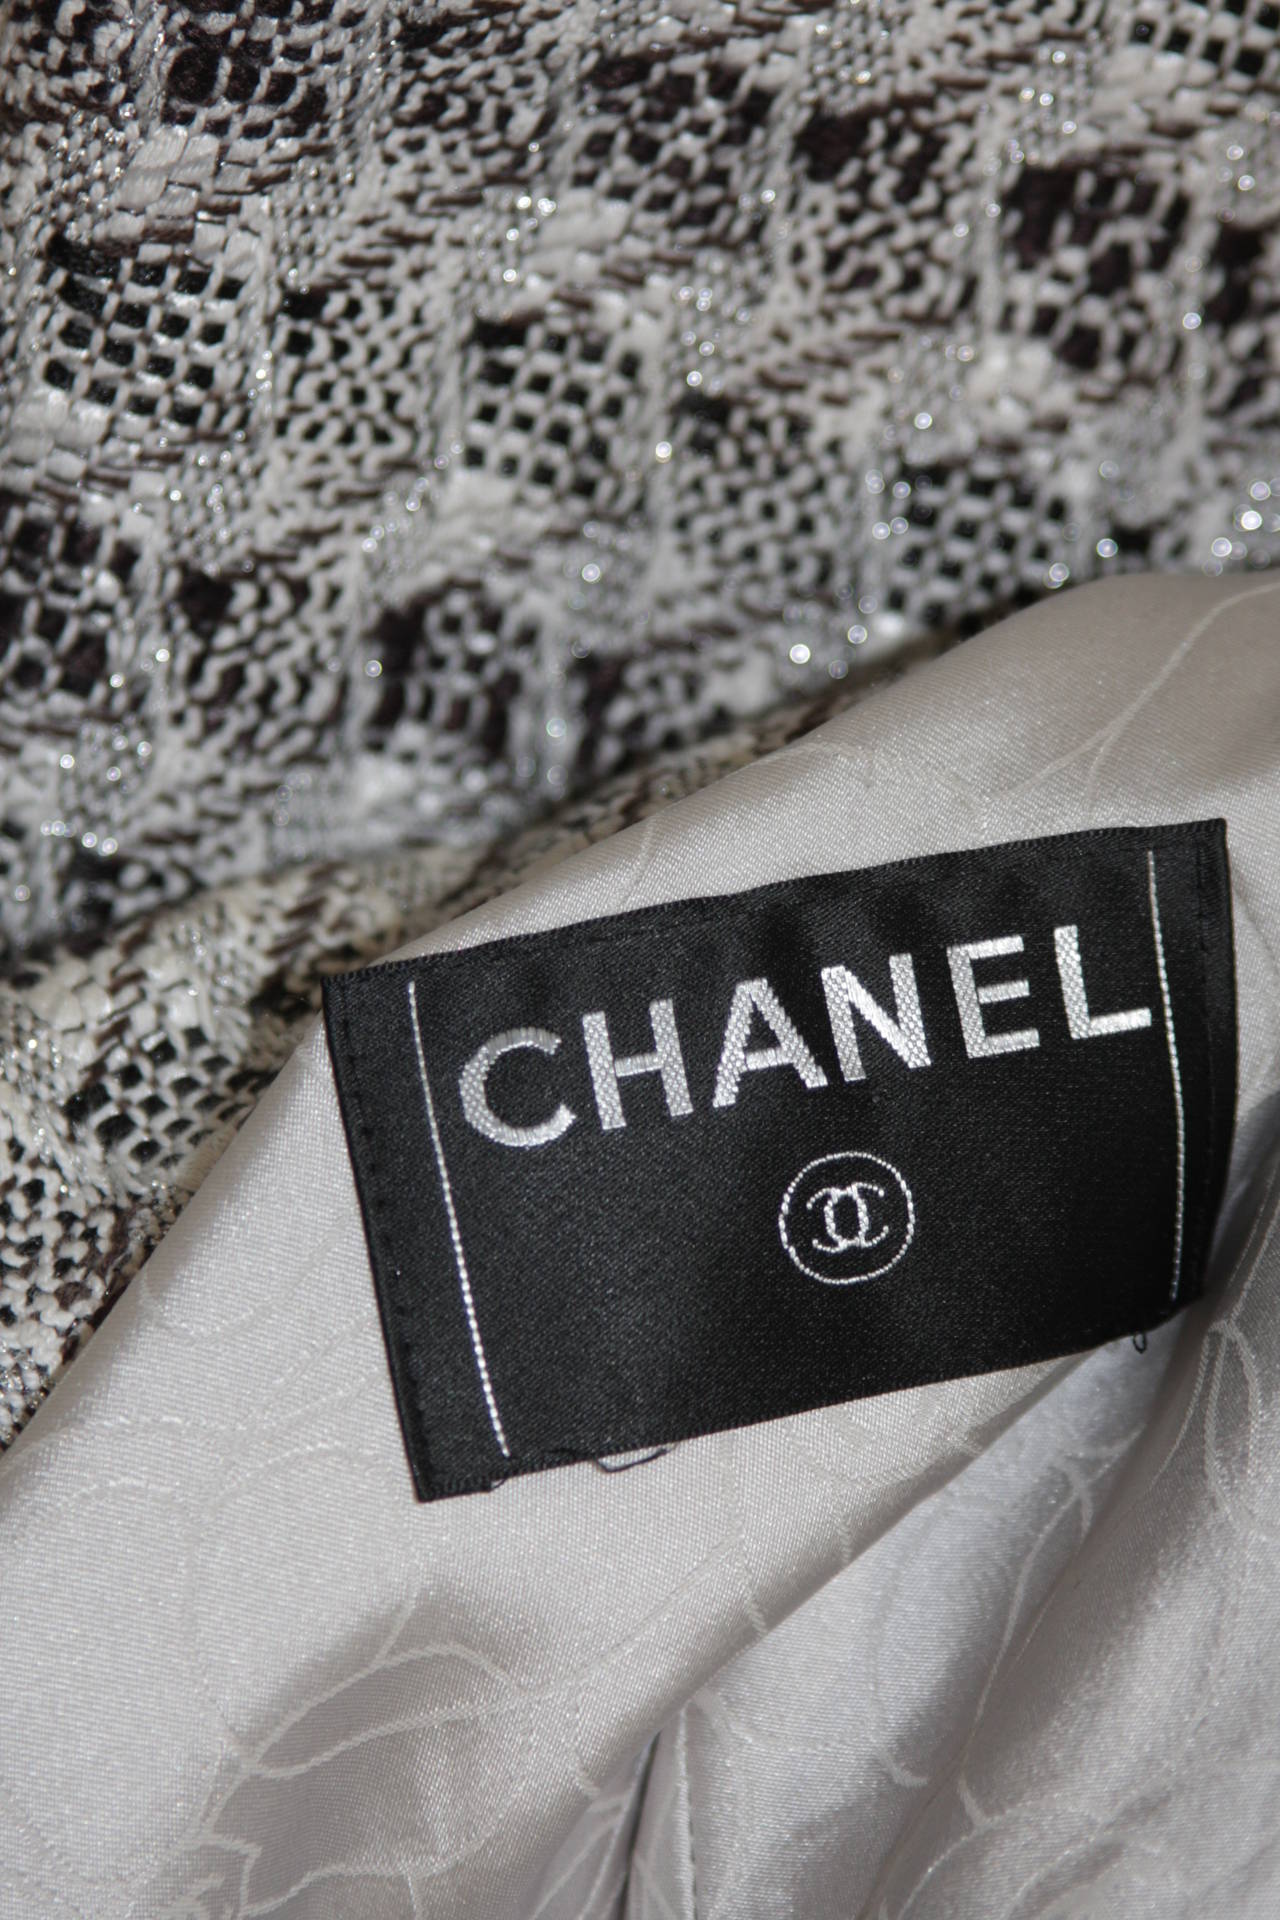 Chanel White Black and Silver Metallic Tweed Blazer 6